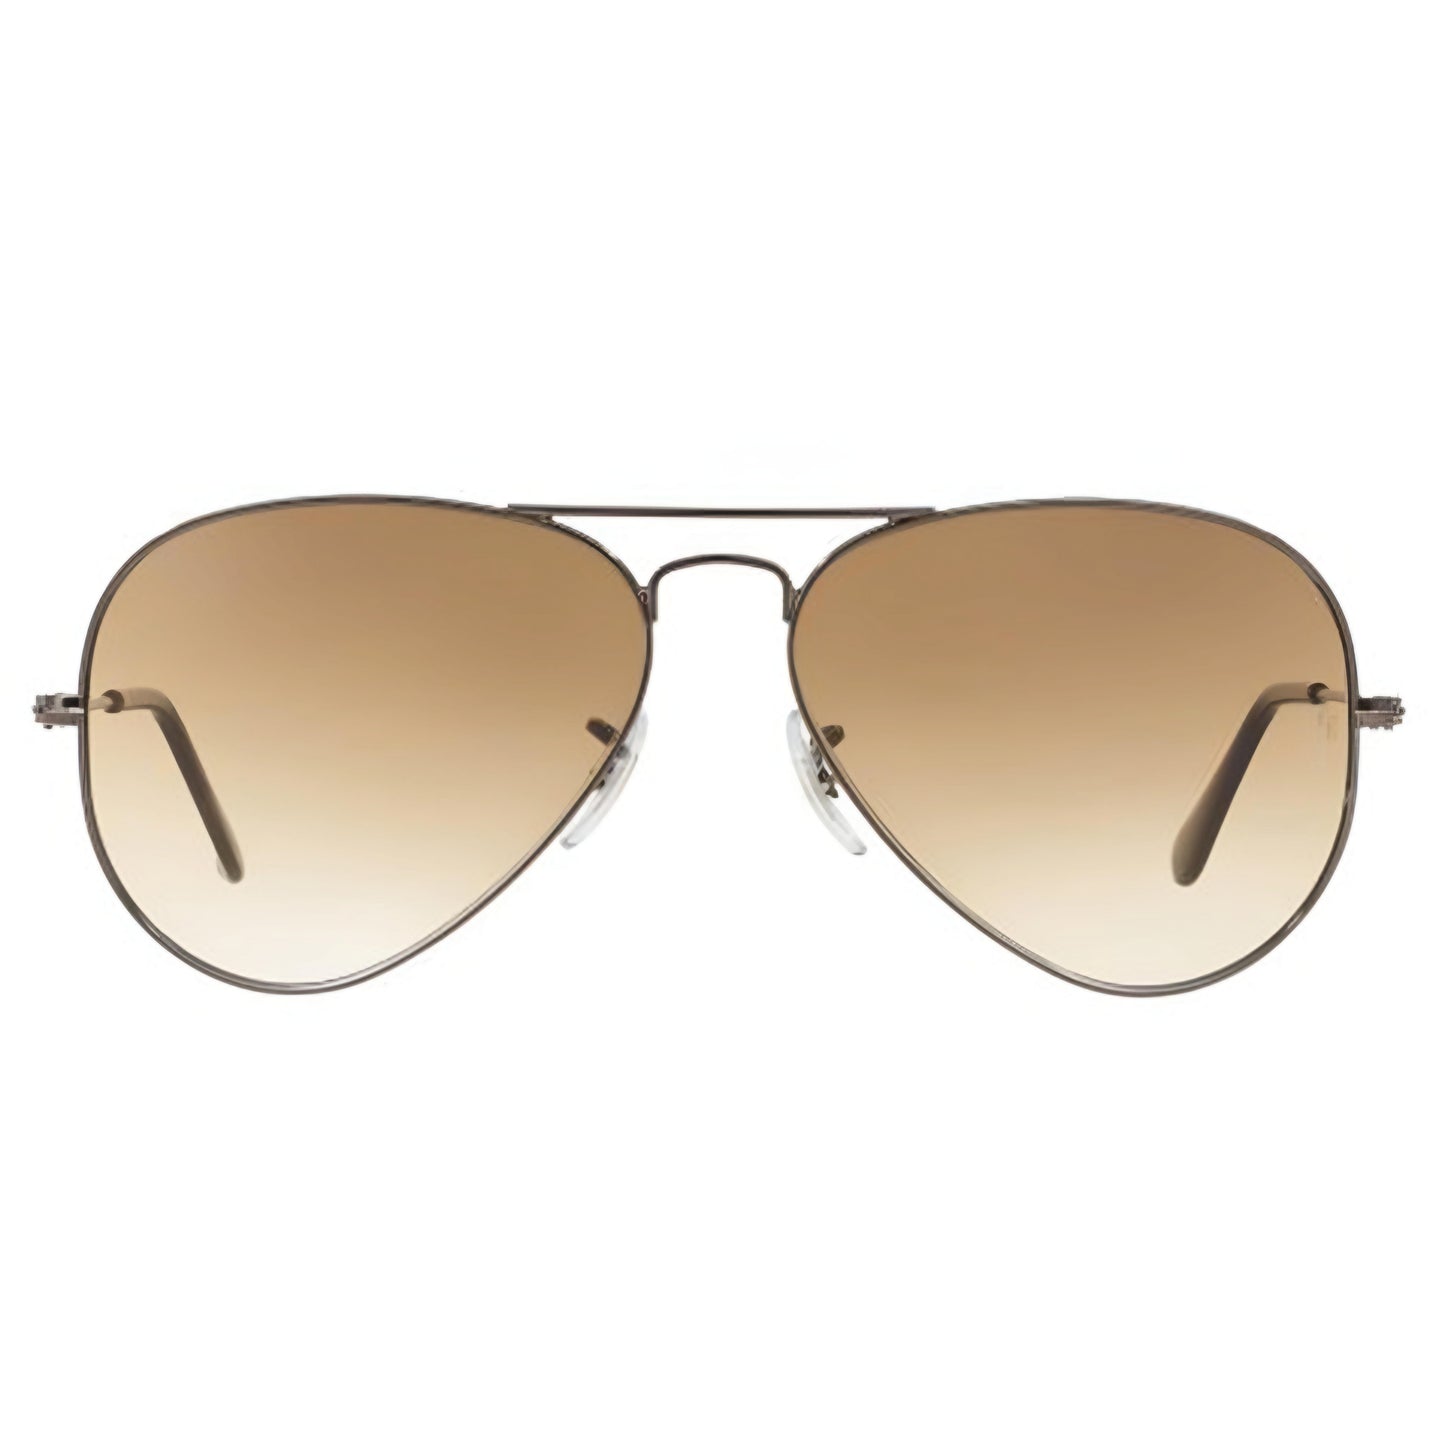 Brown Aviator Fizamart sunglasses